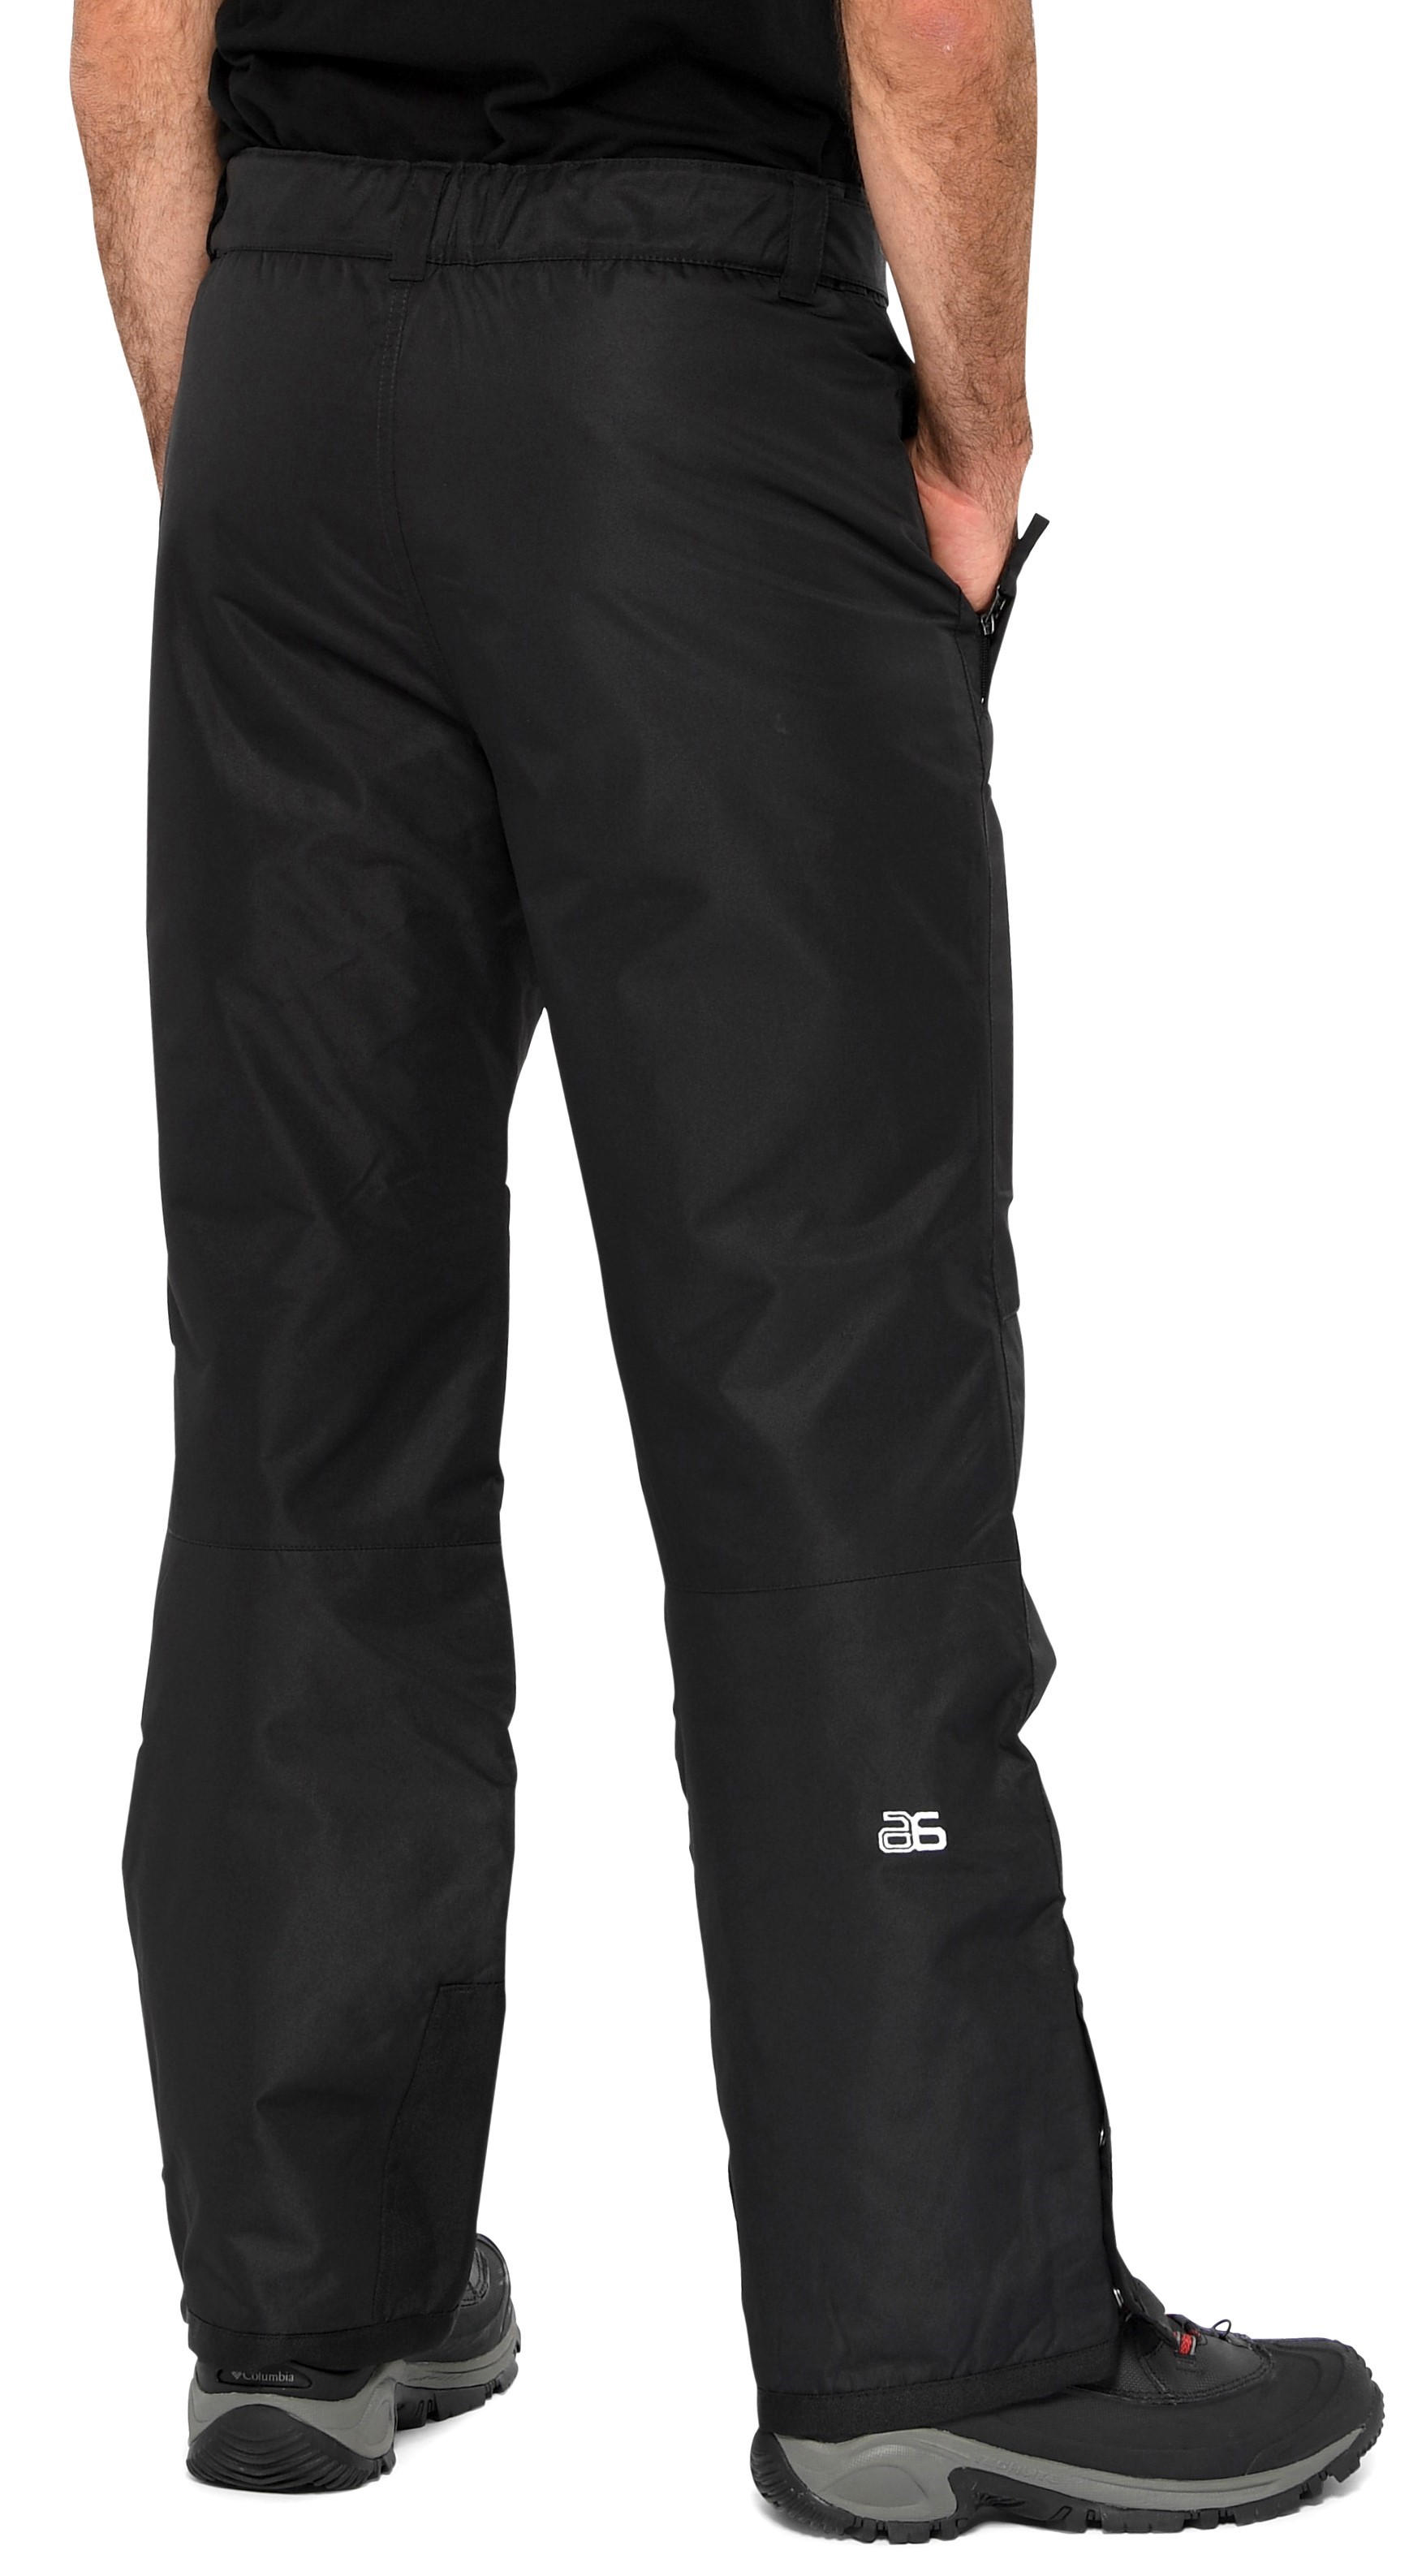 SkiGear by Arctix Men's Essential Snow Pants Pant 30" Short - image 2 of 4